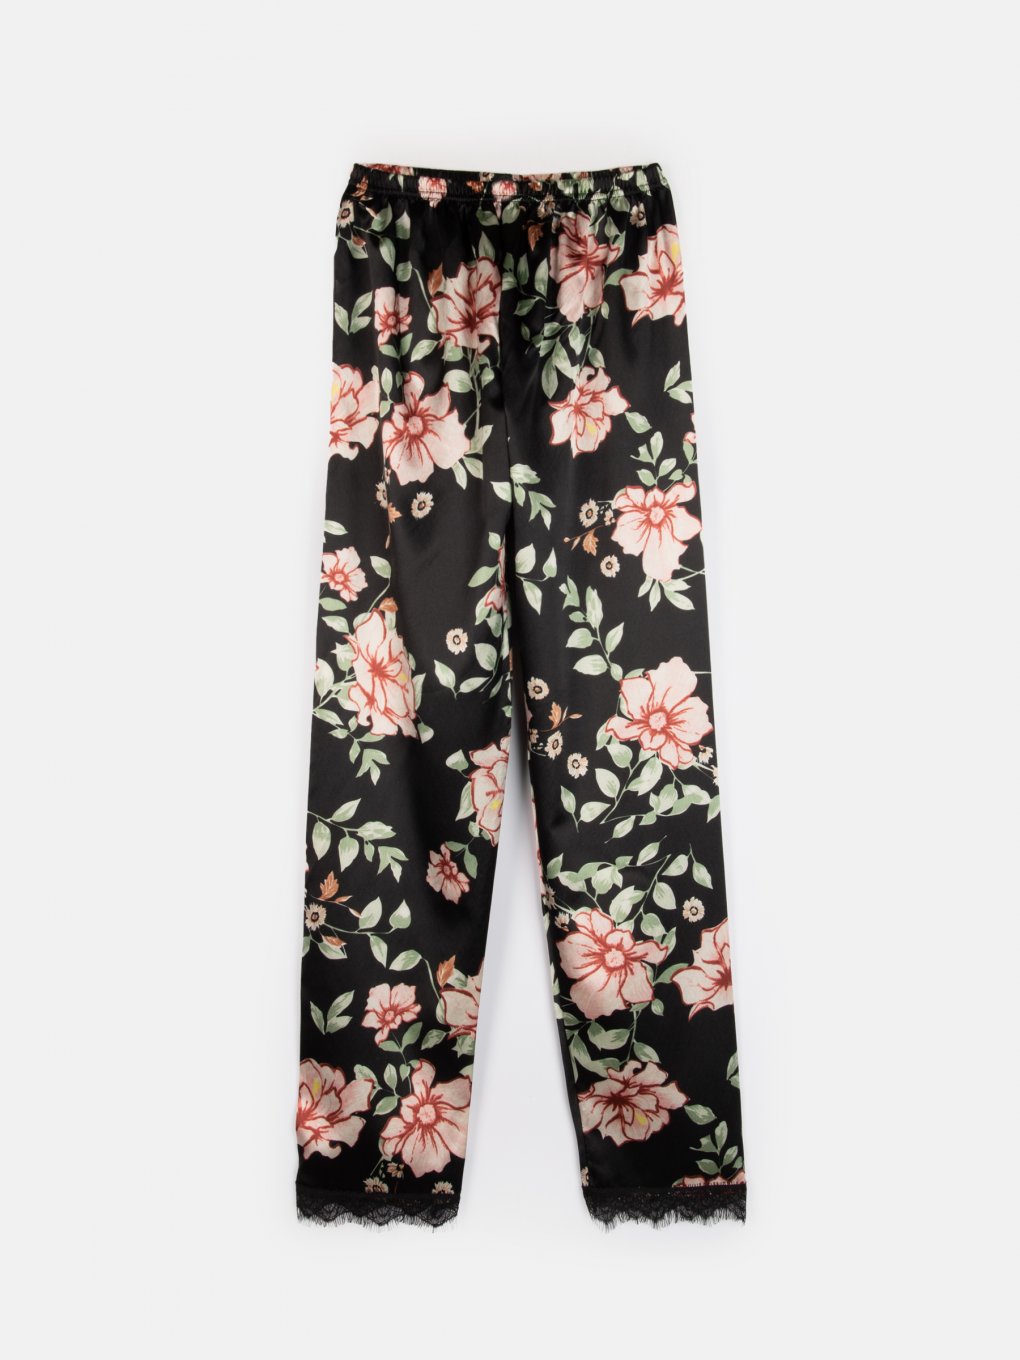 Floral print satin pyjama bottoms with lace